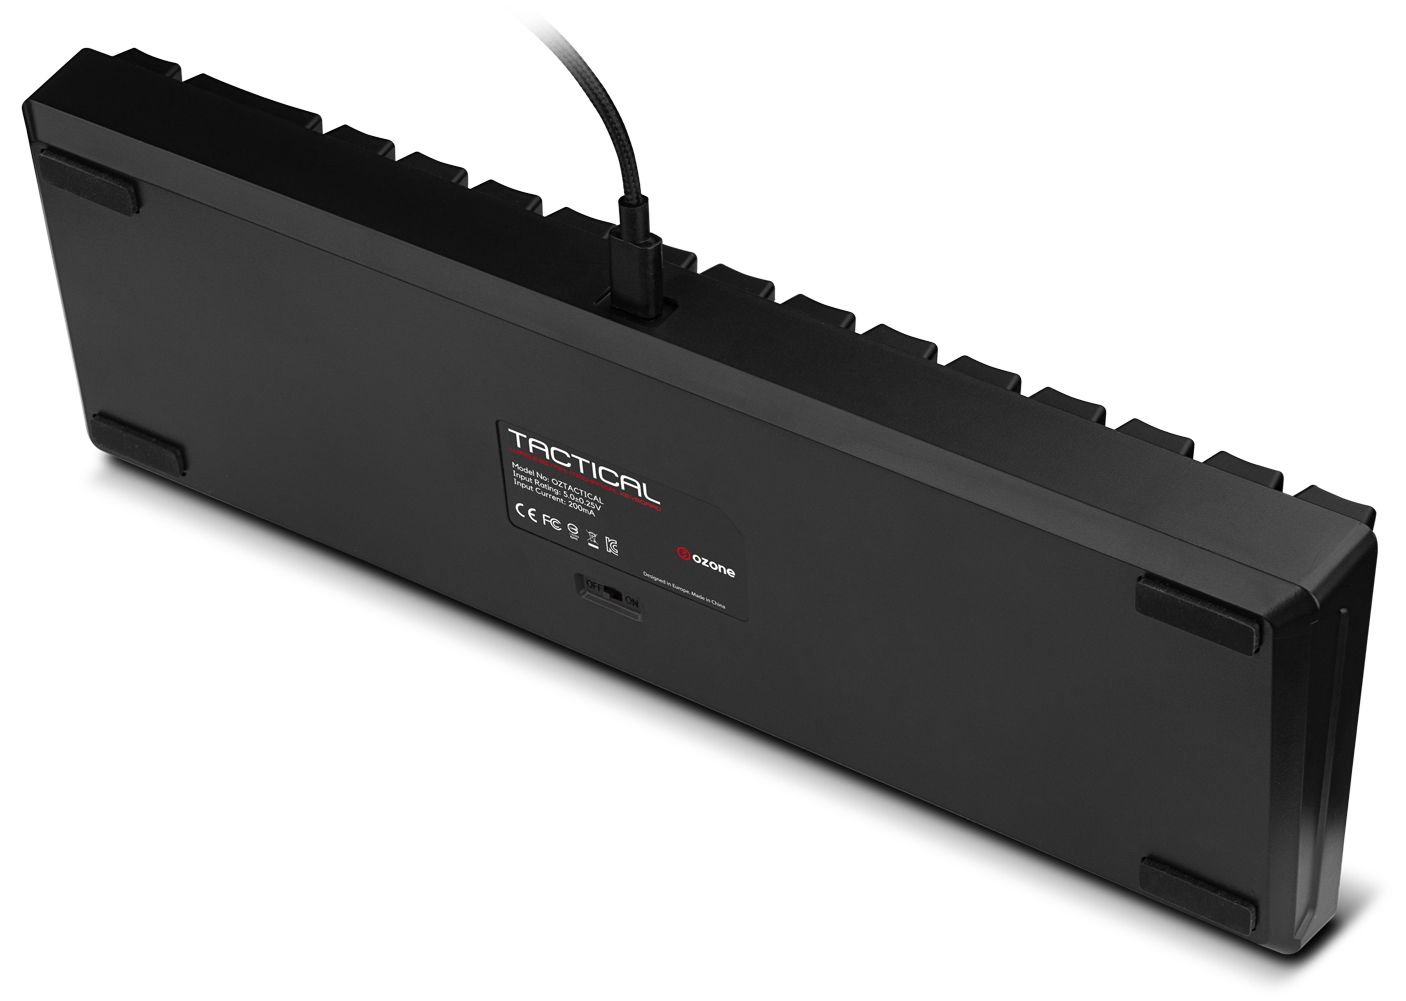 OZTACTICALSP - Teclado Gaming Mecnico OZONE Tactical Mini Multimedia Retroiluminado Diestro LED RGB 68 Teclas Outemu Red Bluetooth 5.0 Cable 1.5m Negro (OZTACTICALSP)